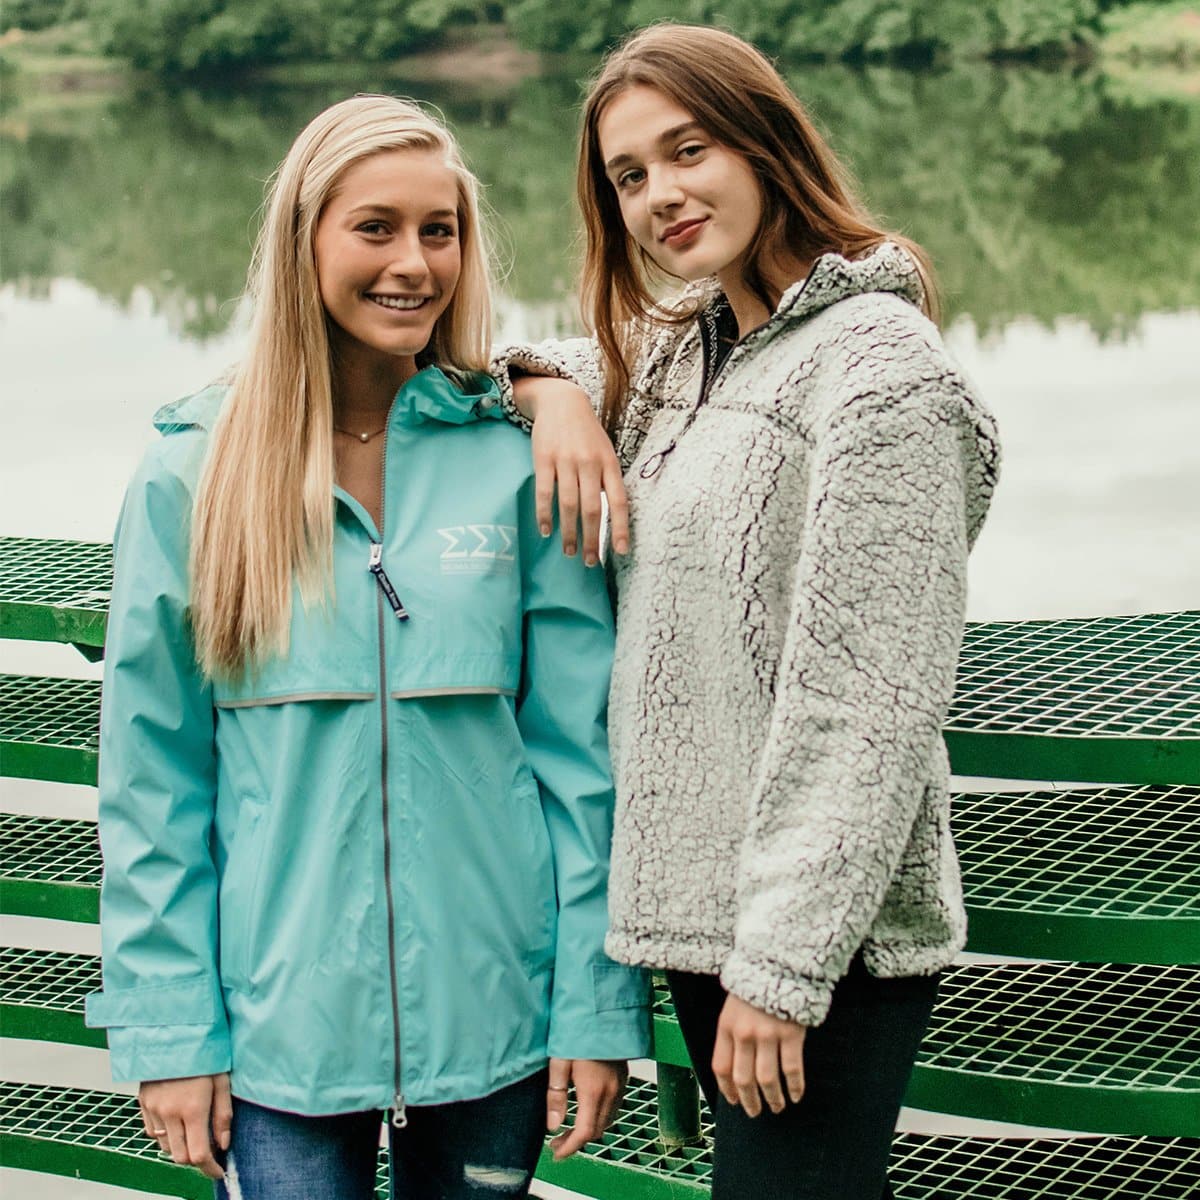 Kappa Charles River Aqua Rain Jacket | Kappa Kappa Gamma | Outerwear > Jackets